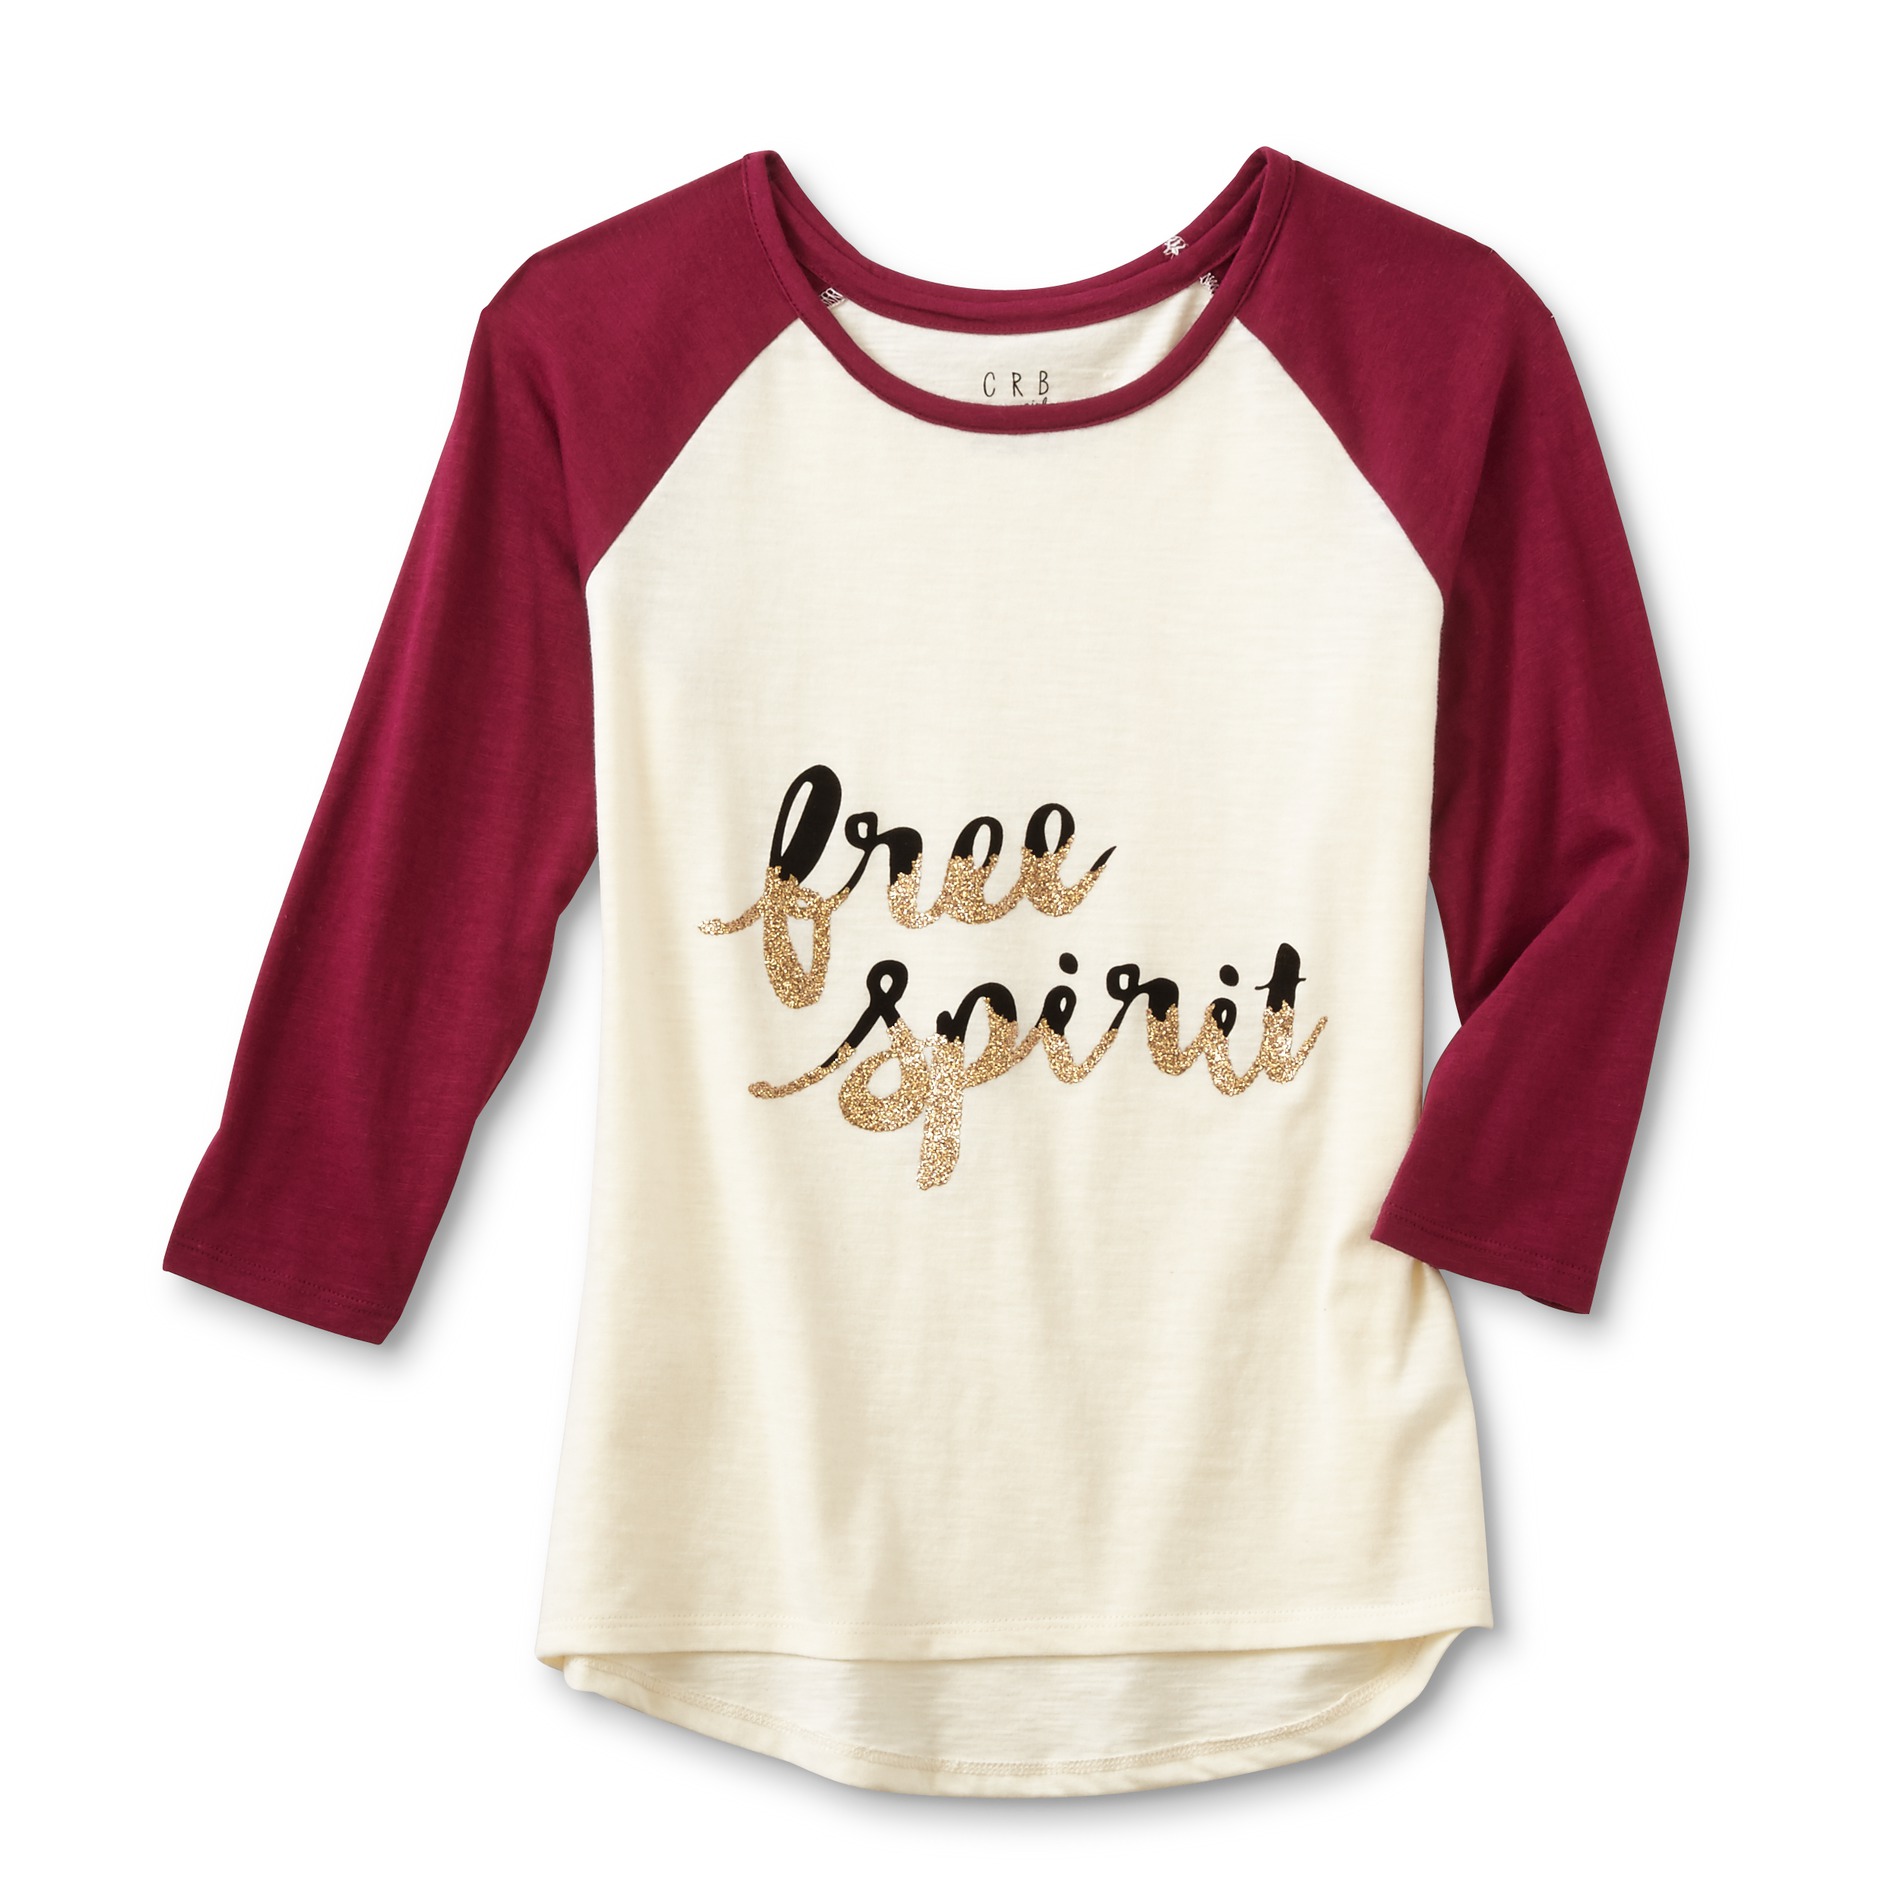 Canyon River Blues Girl's Graphic T-Shirt - Free Spirit